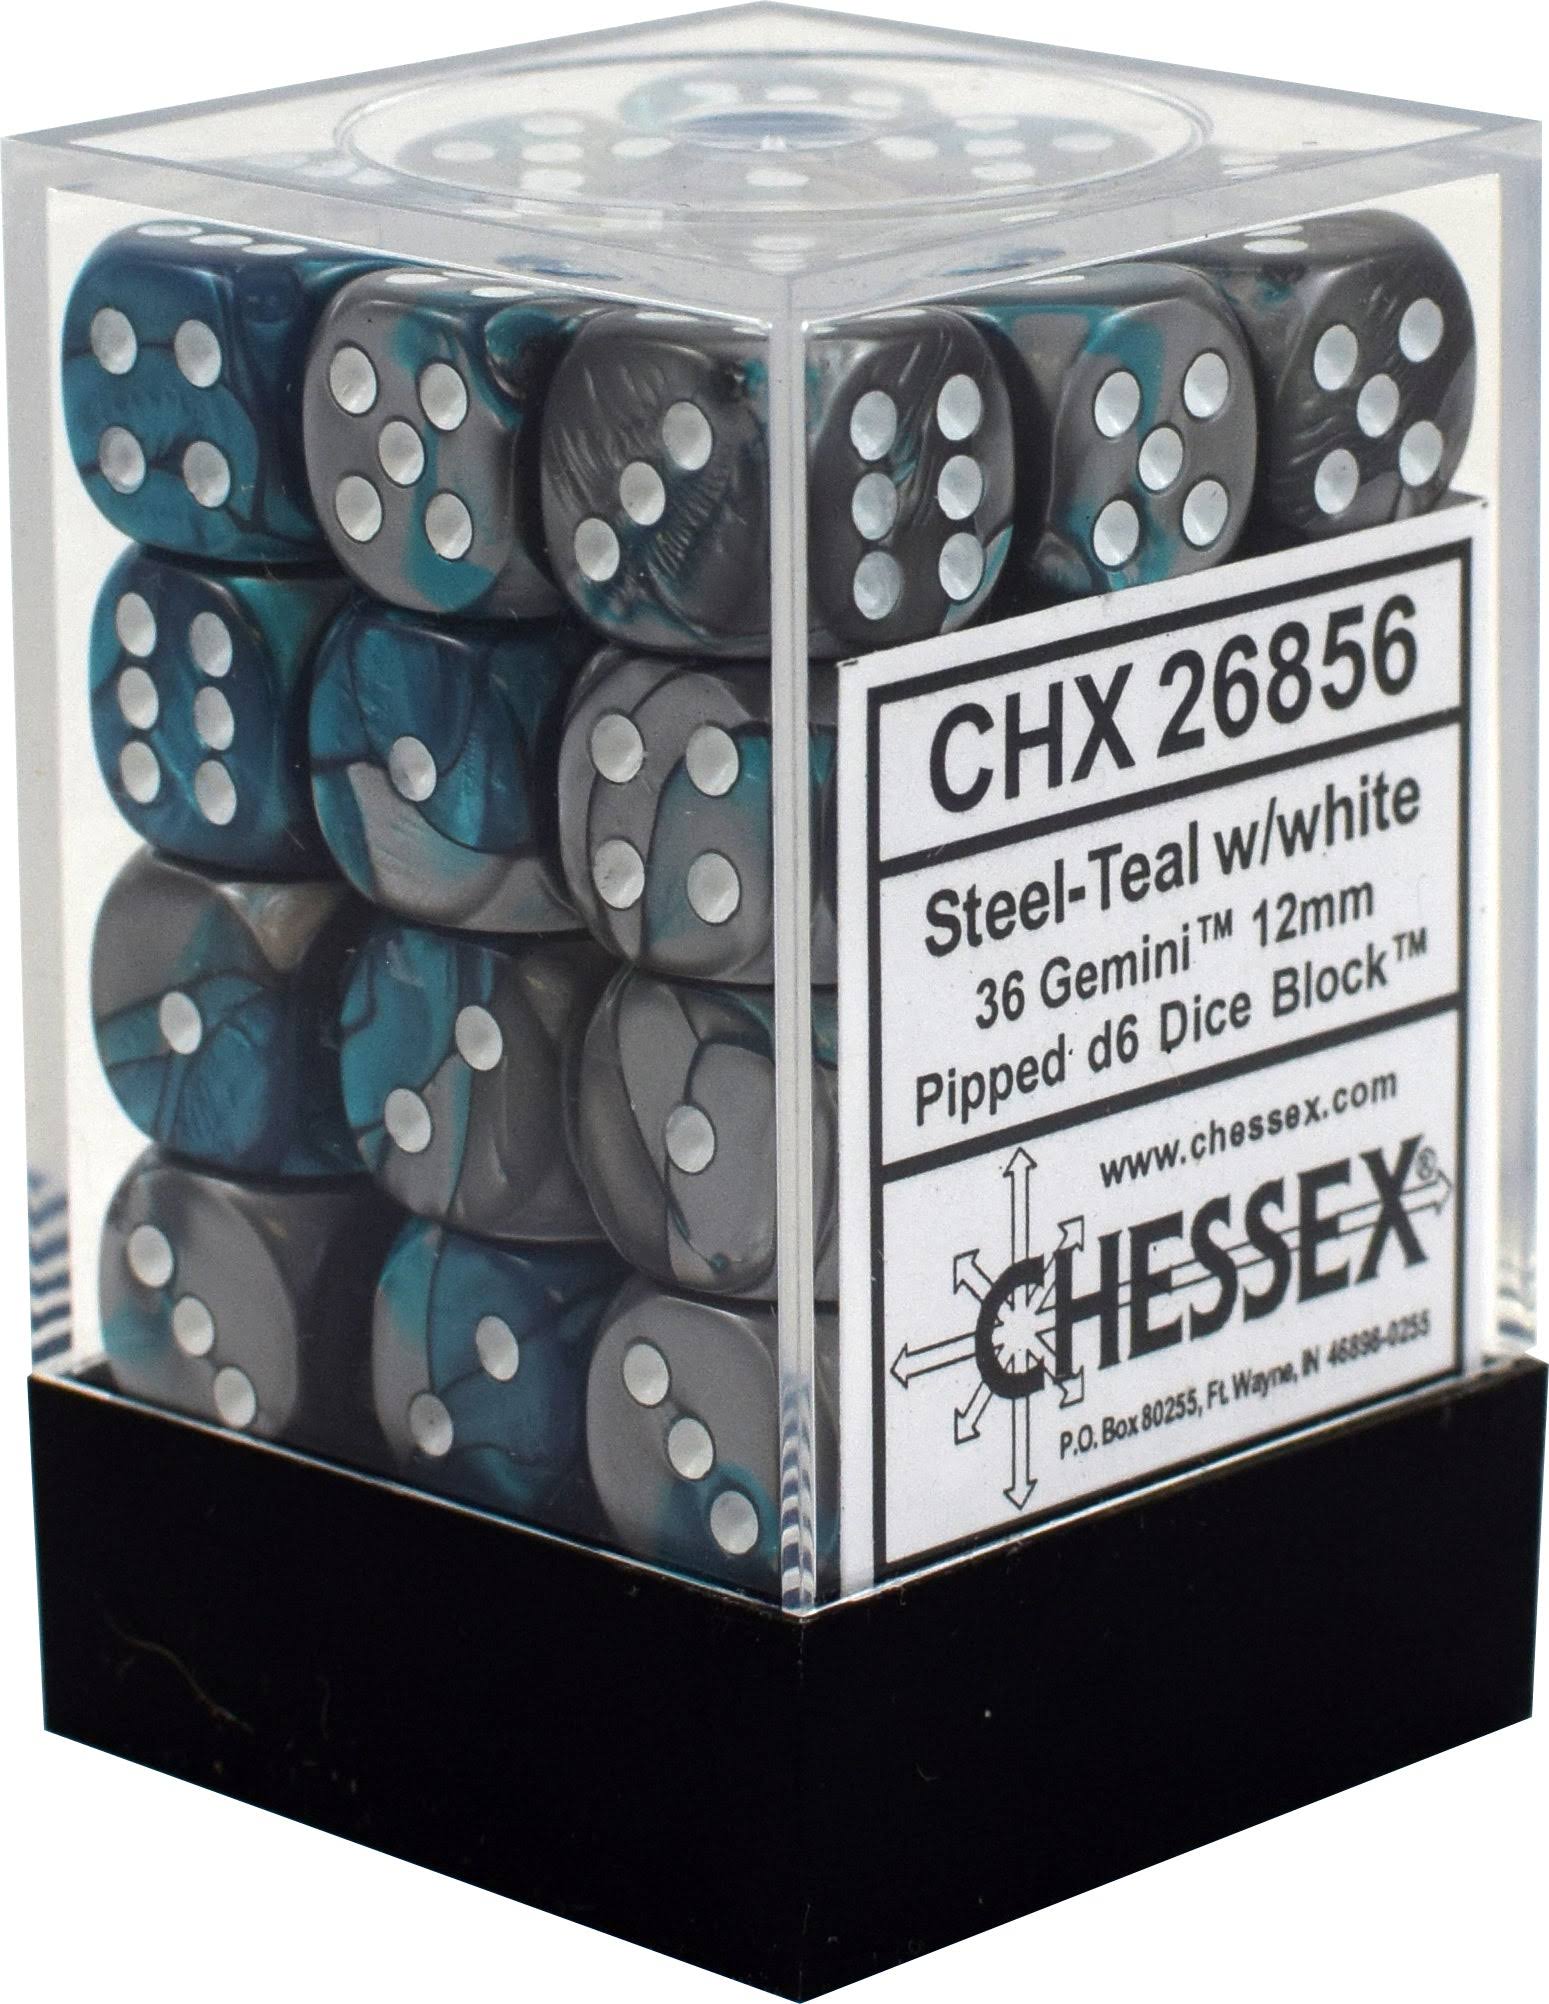 Chessex Gemini Steel-Teal/White 12mm D6 Dice Block (36)